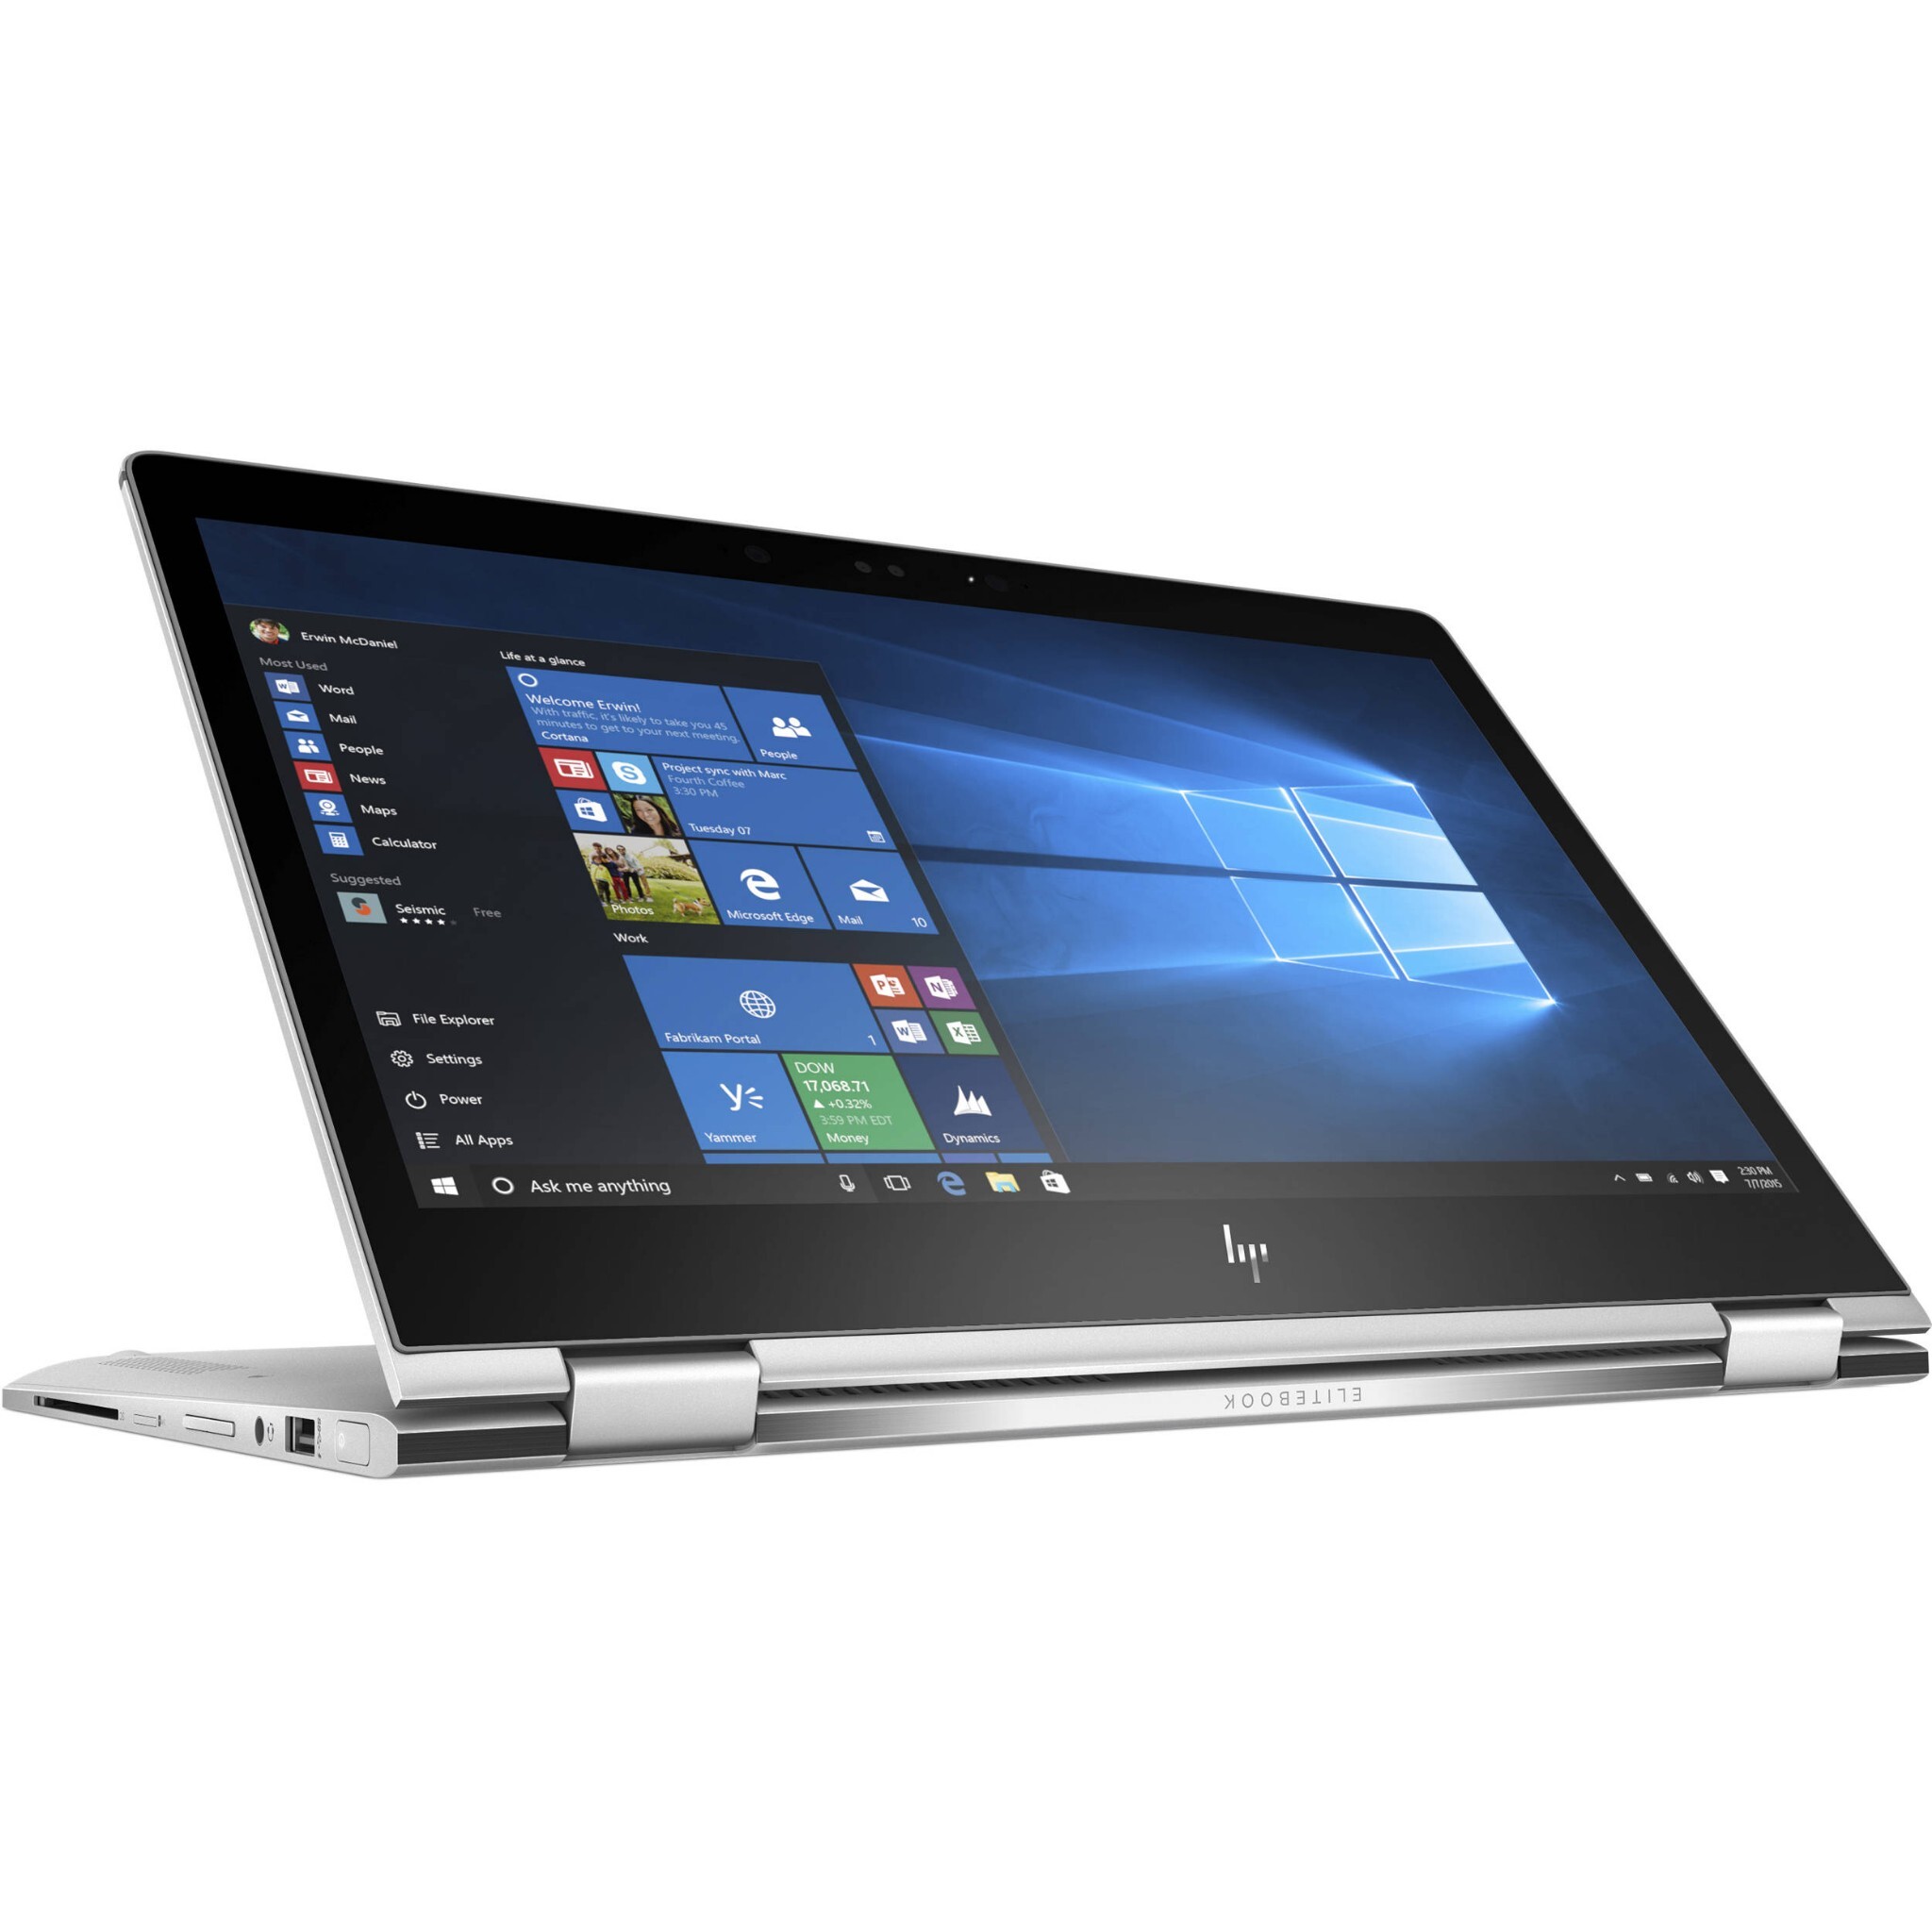 Laptop HP EliteBook x360 1030 G2 1GY38PA - Intel core i7, 16GB RAM, SSD 512GB, Intel HD Graphics, 13.3 inch